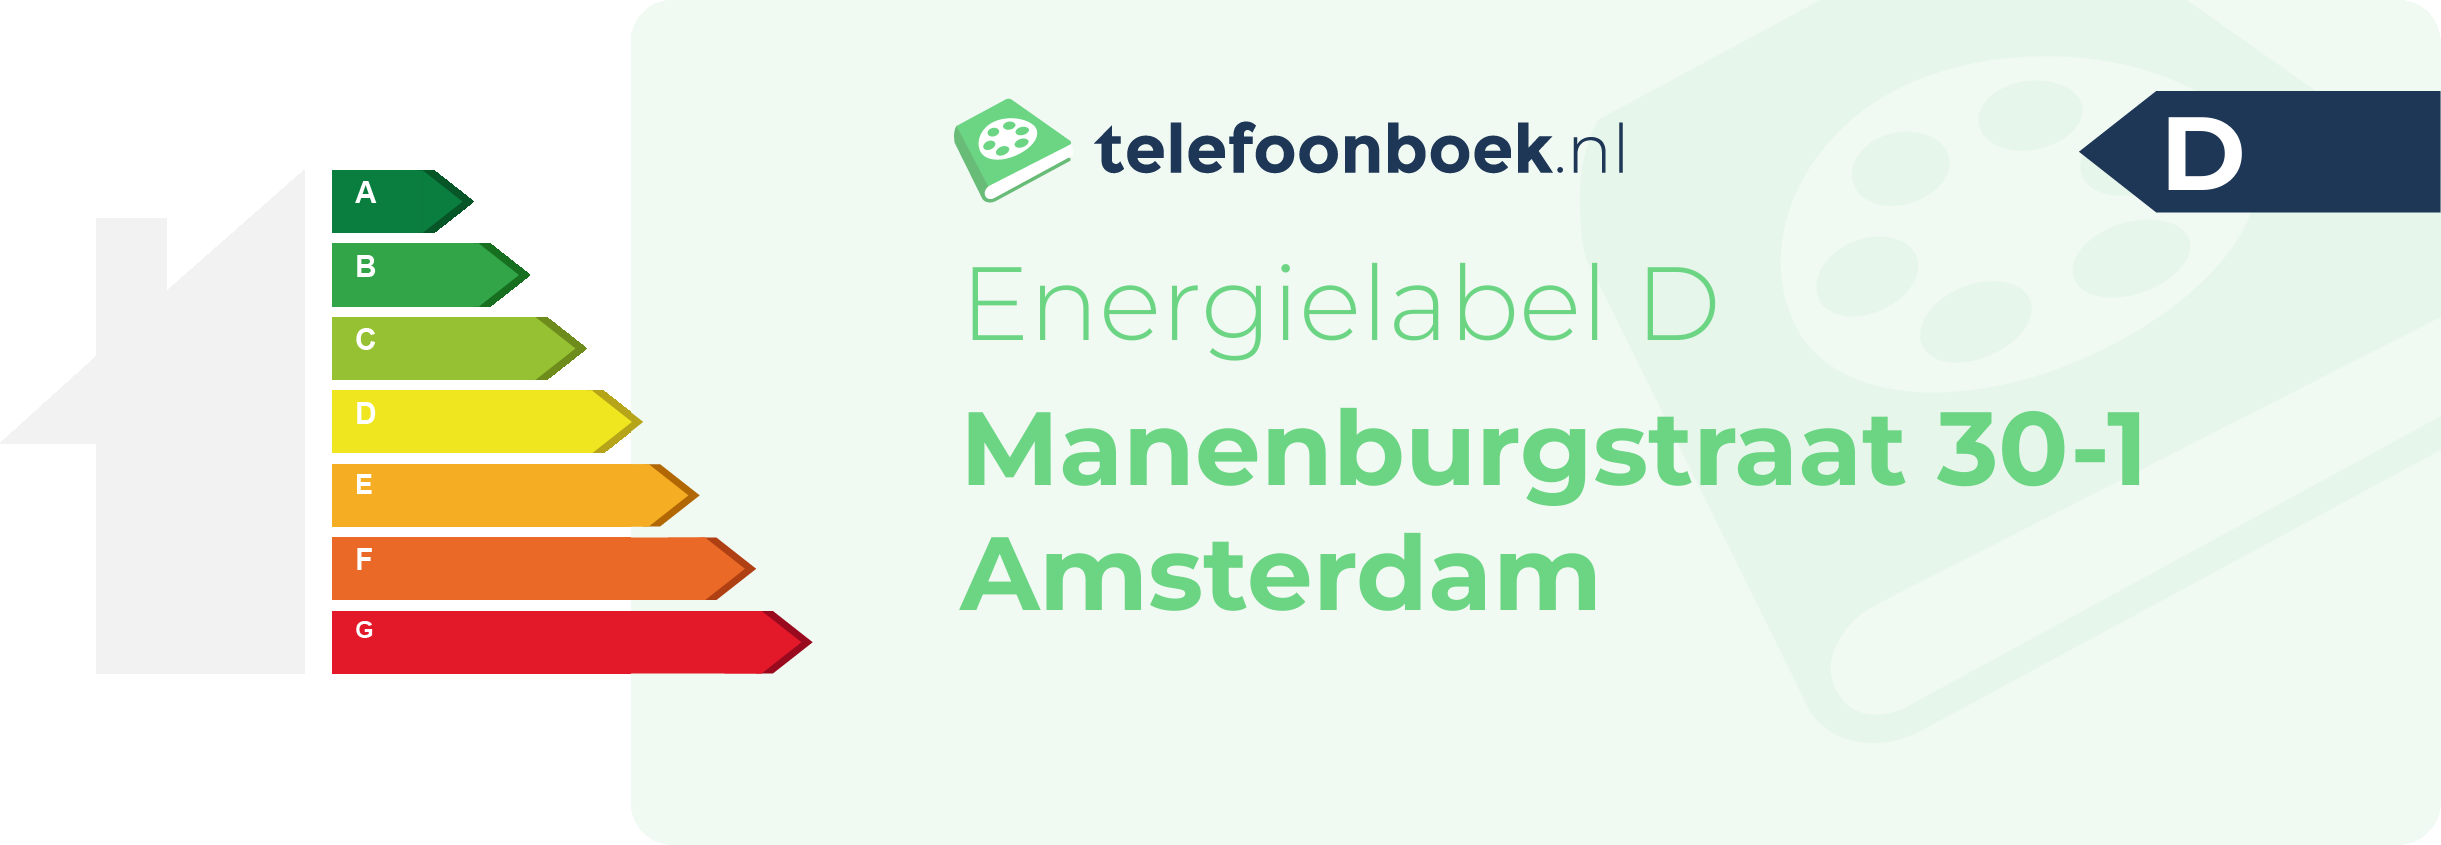 Energielabel Manenburgstraat 30-1 Amsterdam